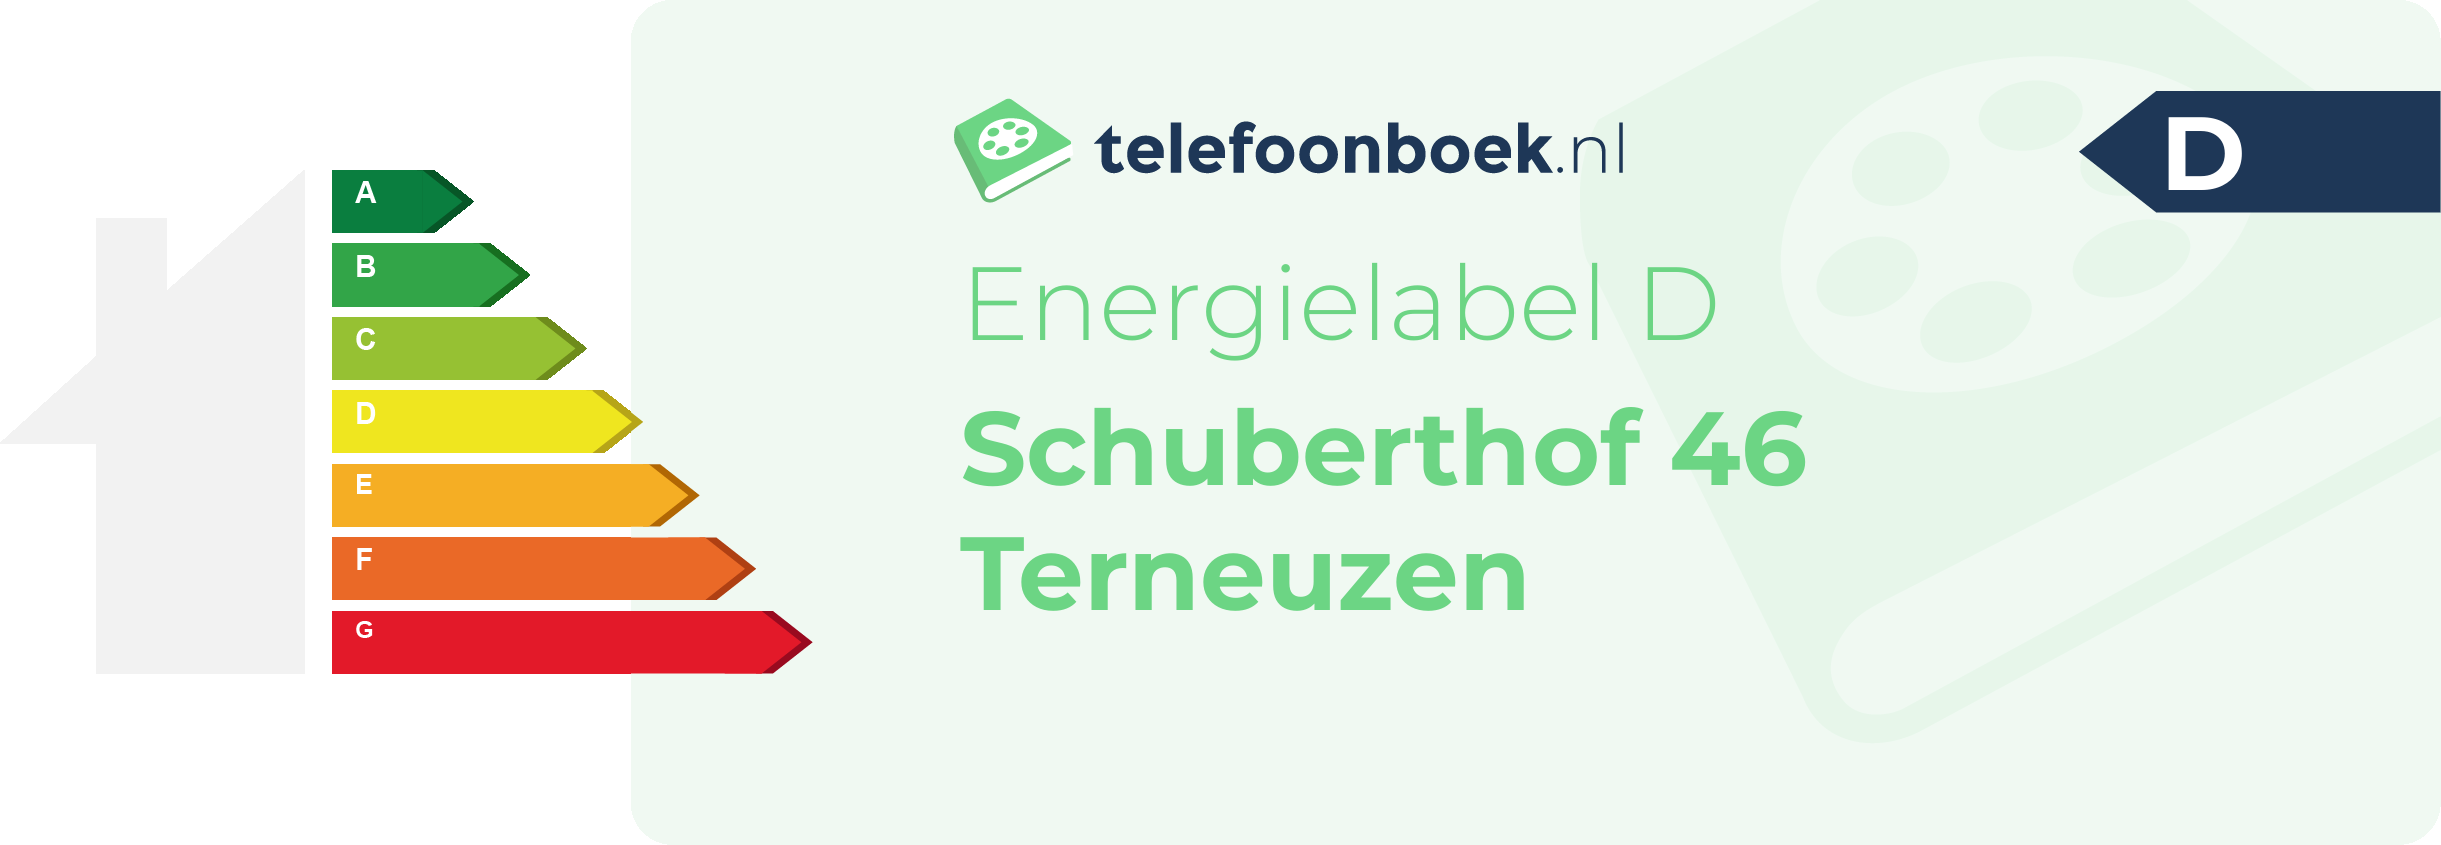 Energielabel Schuberthof 46 Terneuzen